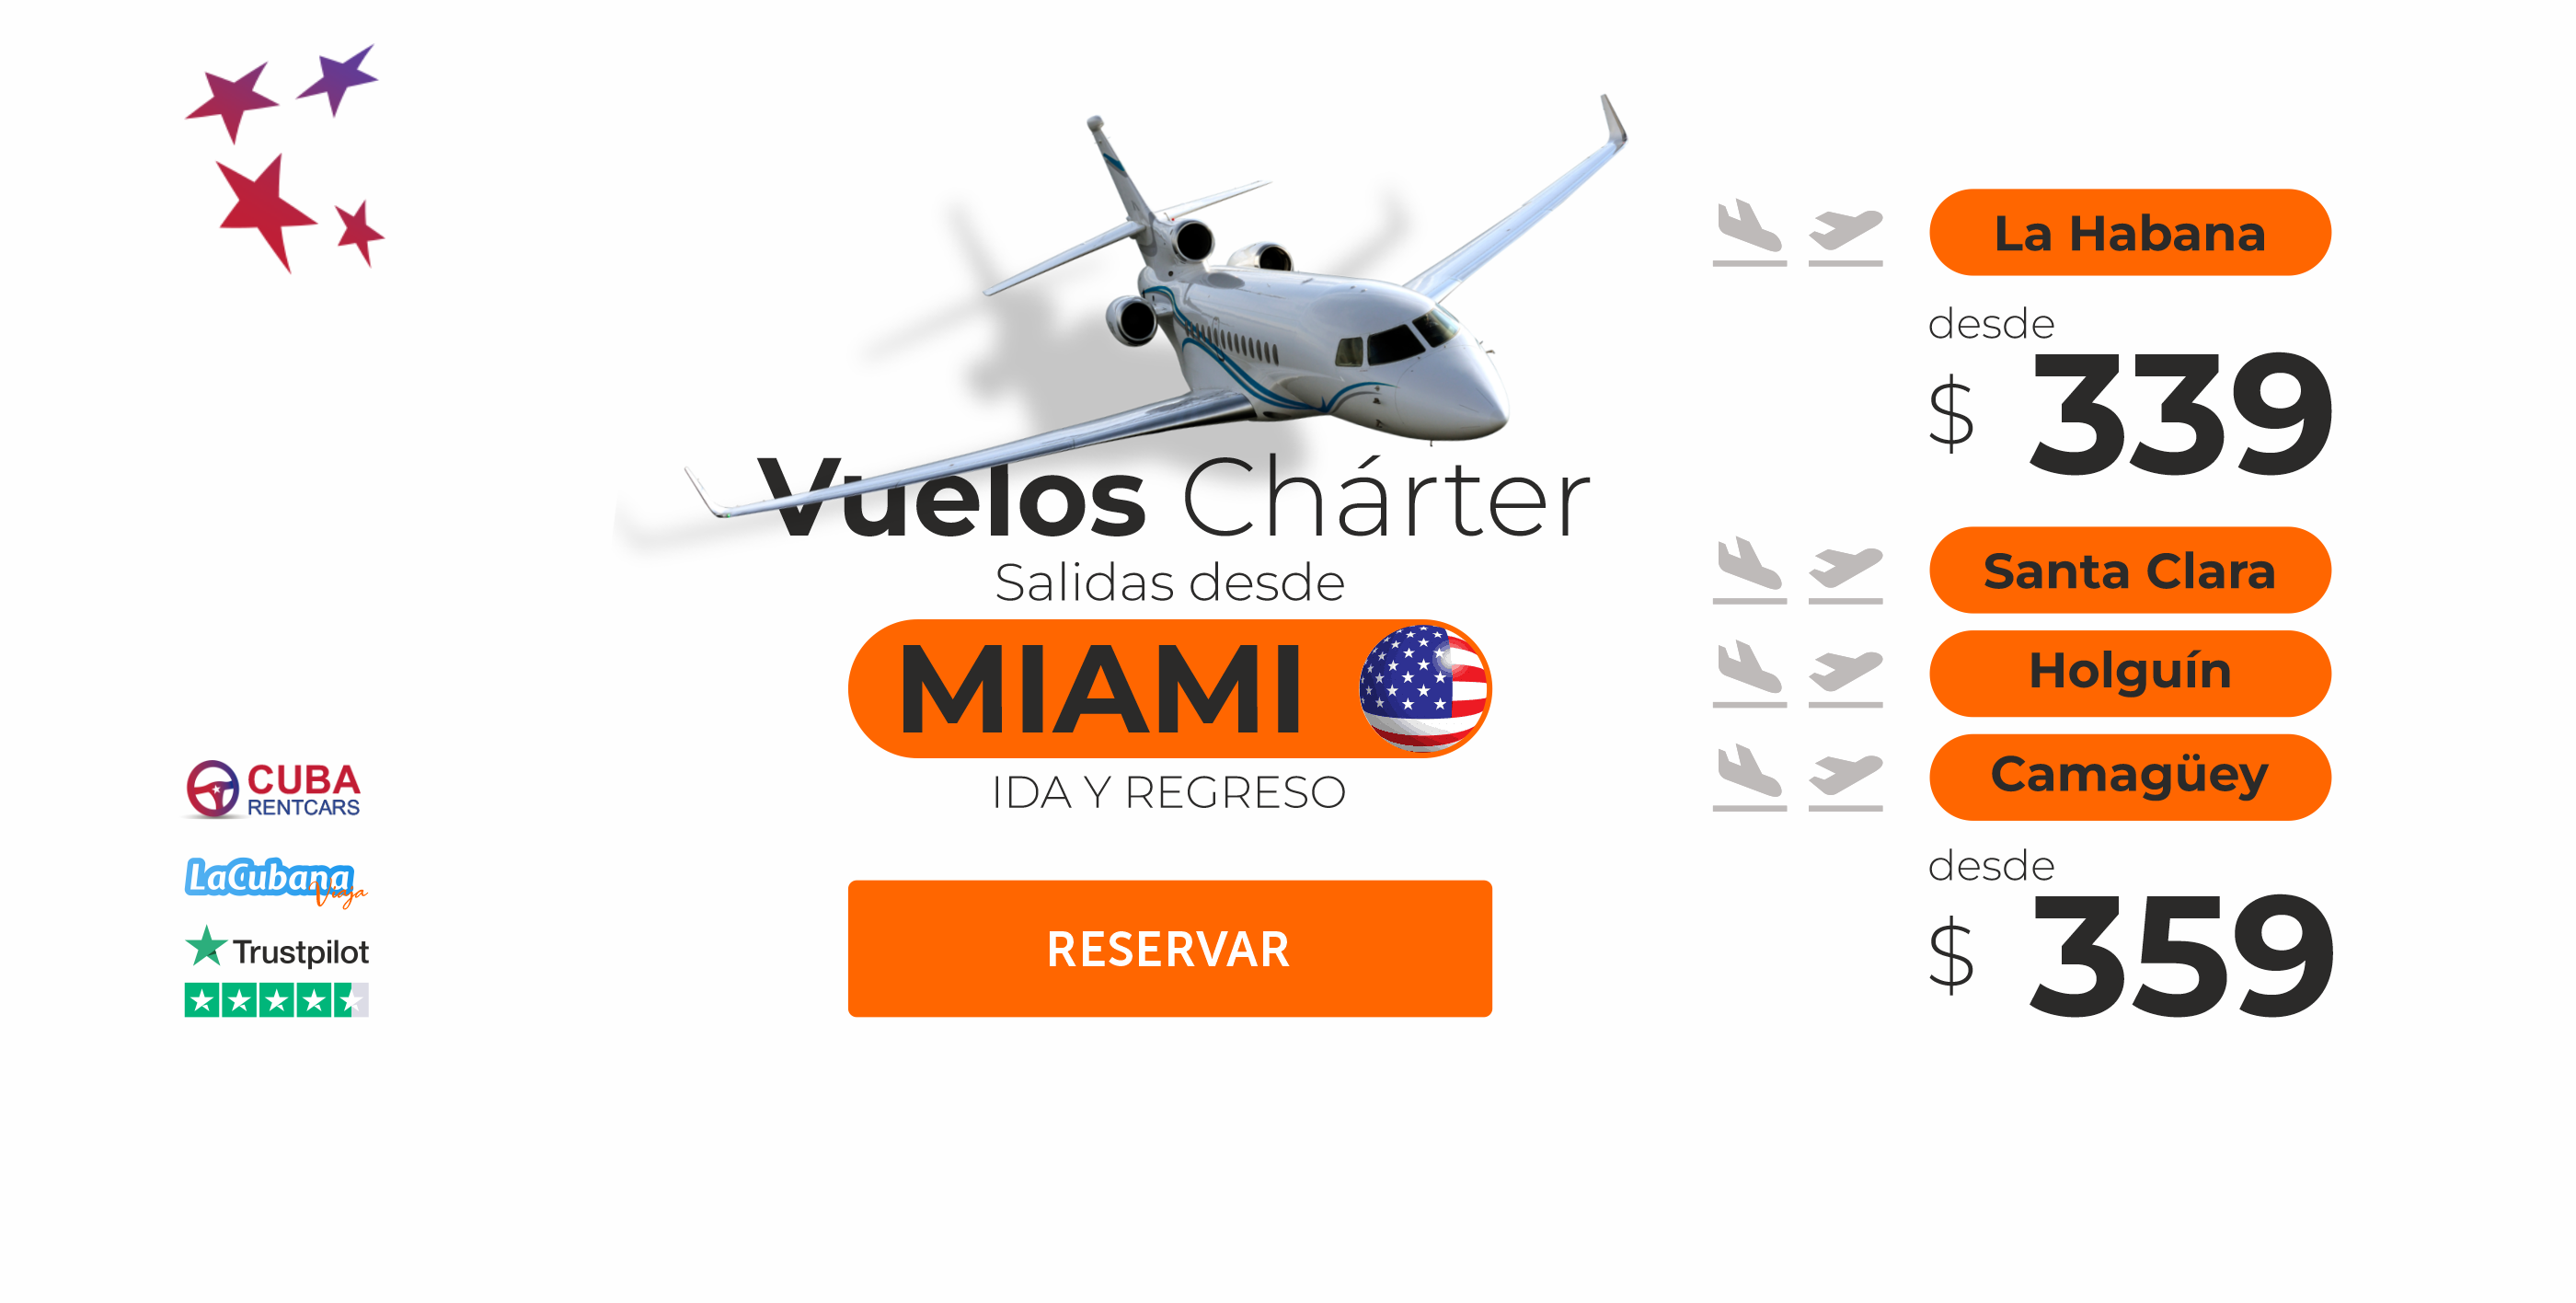 Vuelos Charter Miami Cuba